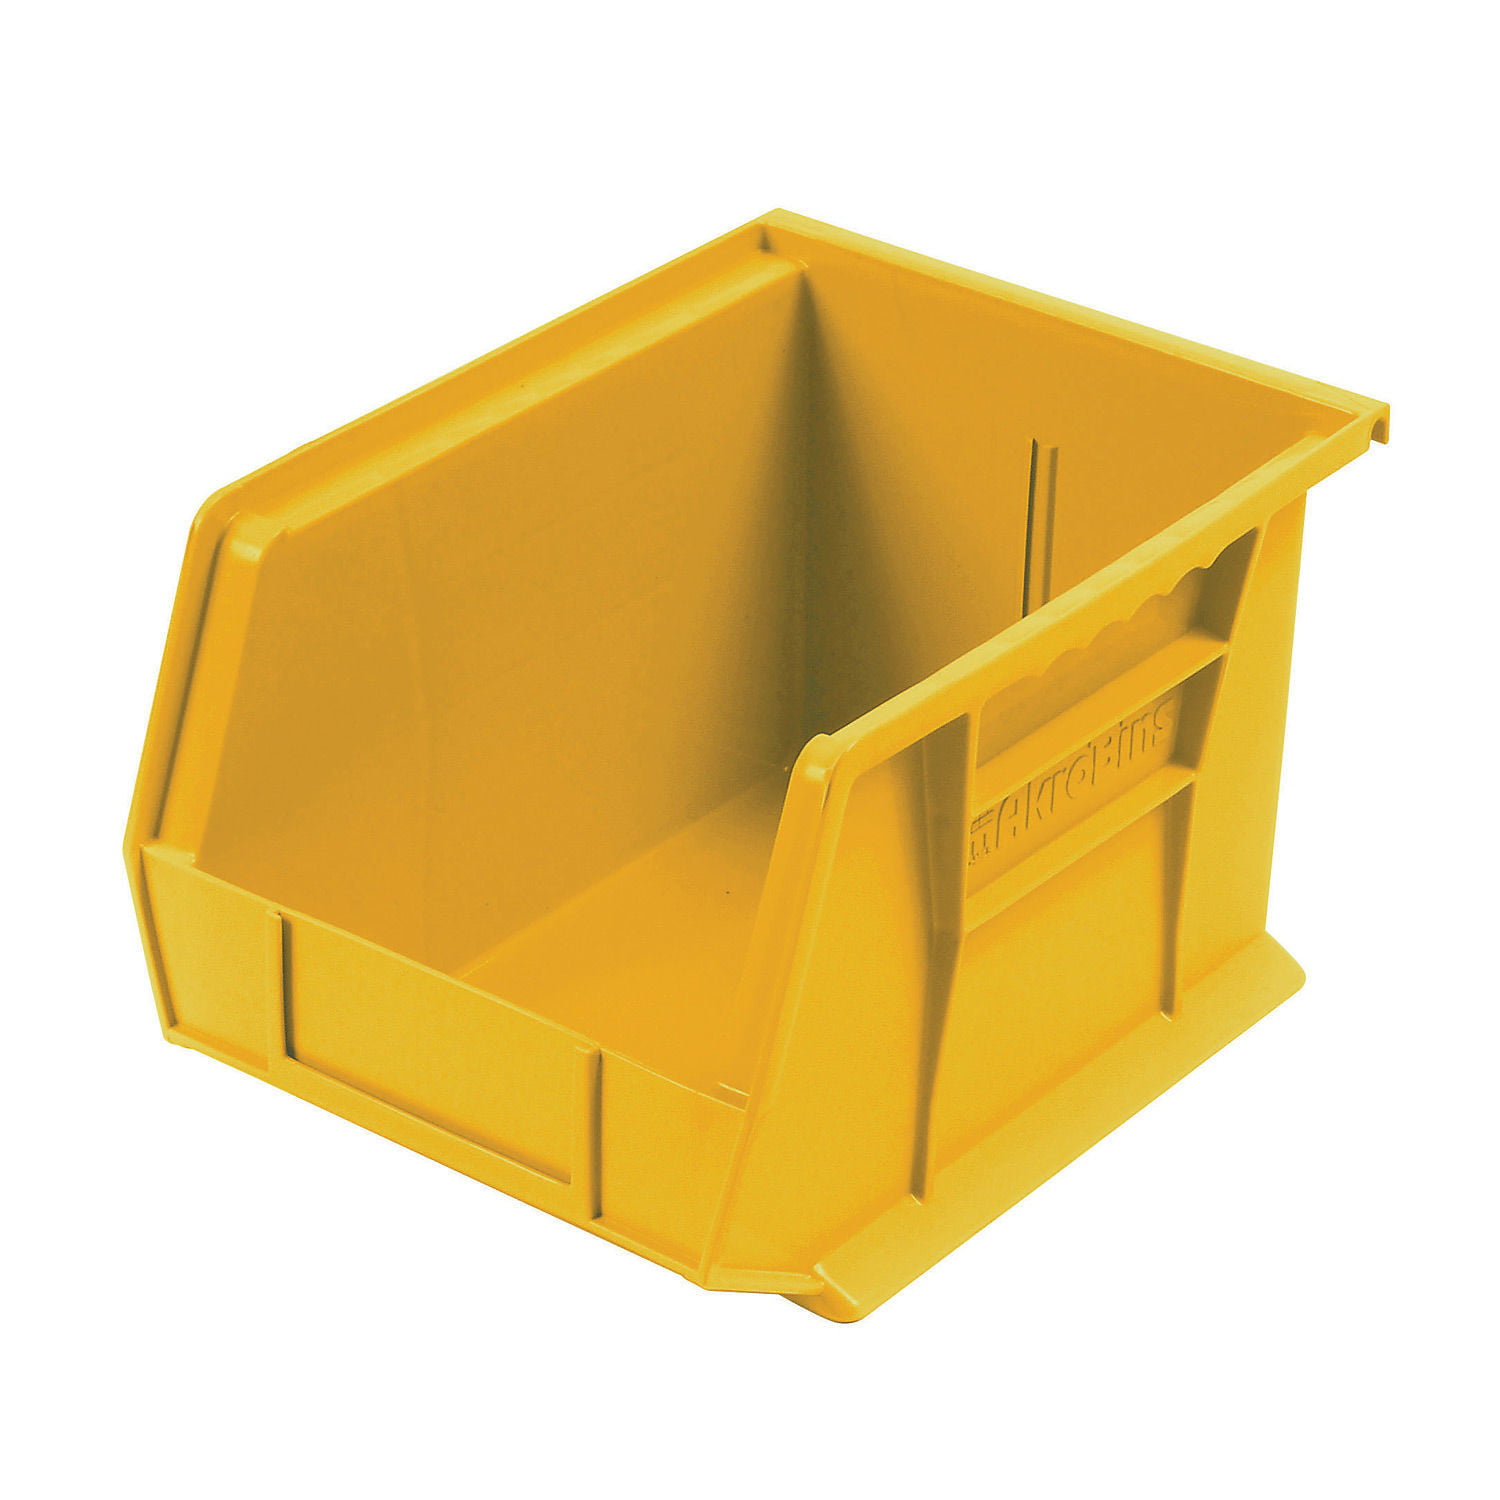 Plastic Stacking Bin Yellow Lot of 12 5-1/2"W x 14-3/4"D x 5"H 